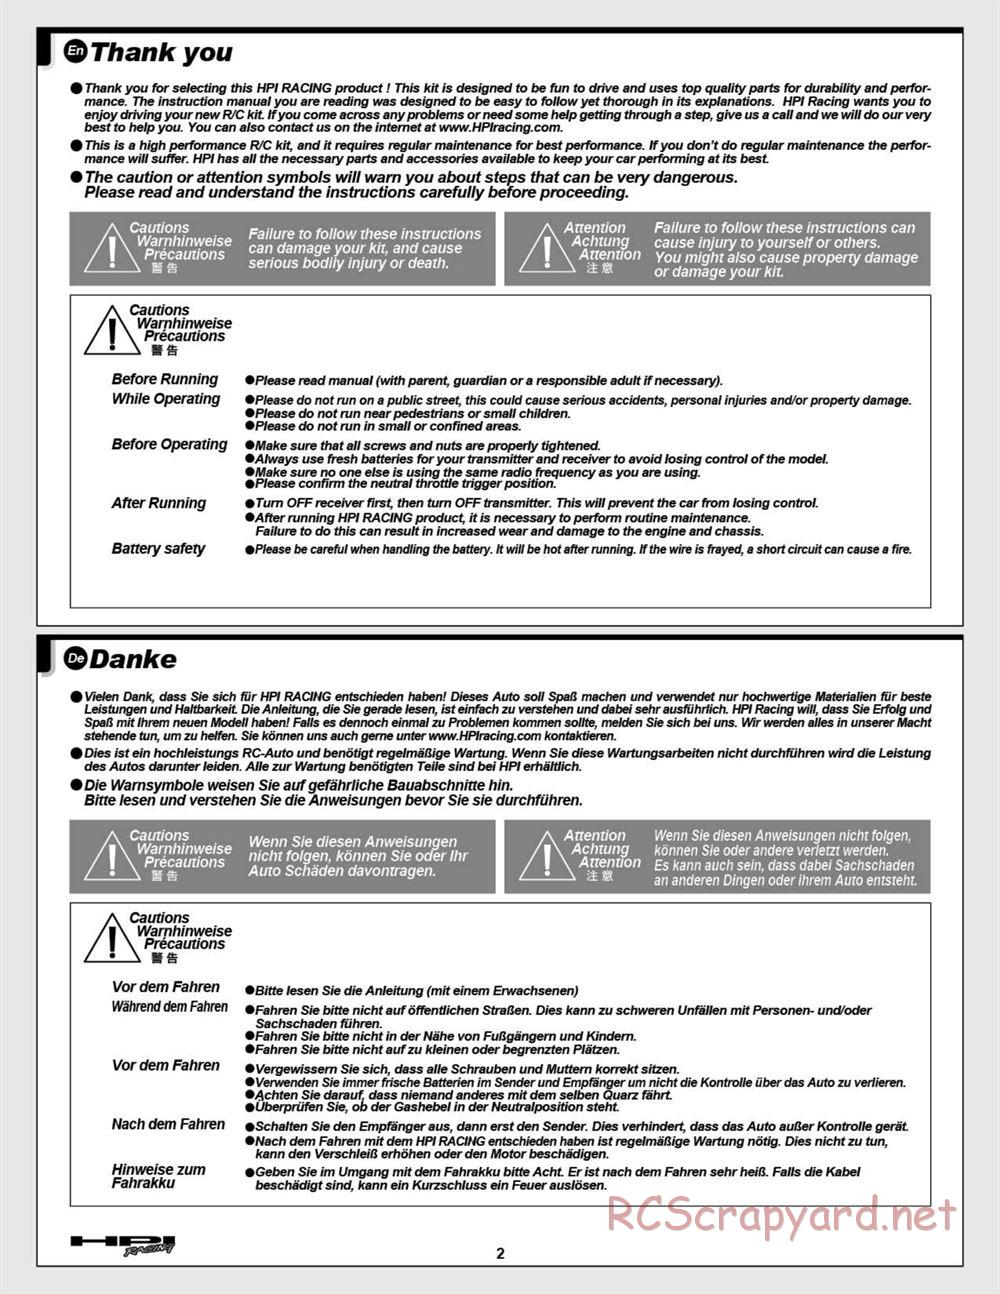 HPI - Brama 10B - Manual - Page 2